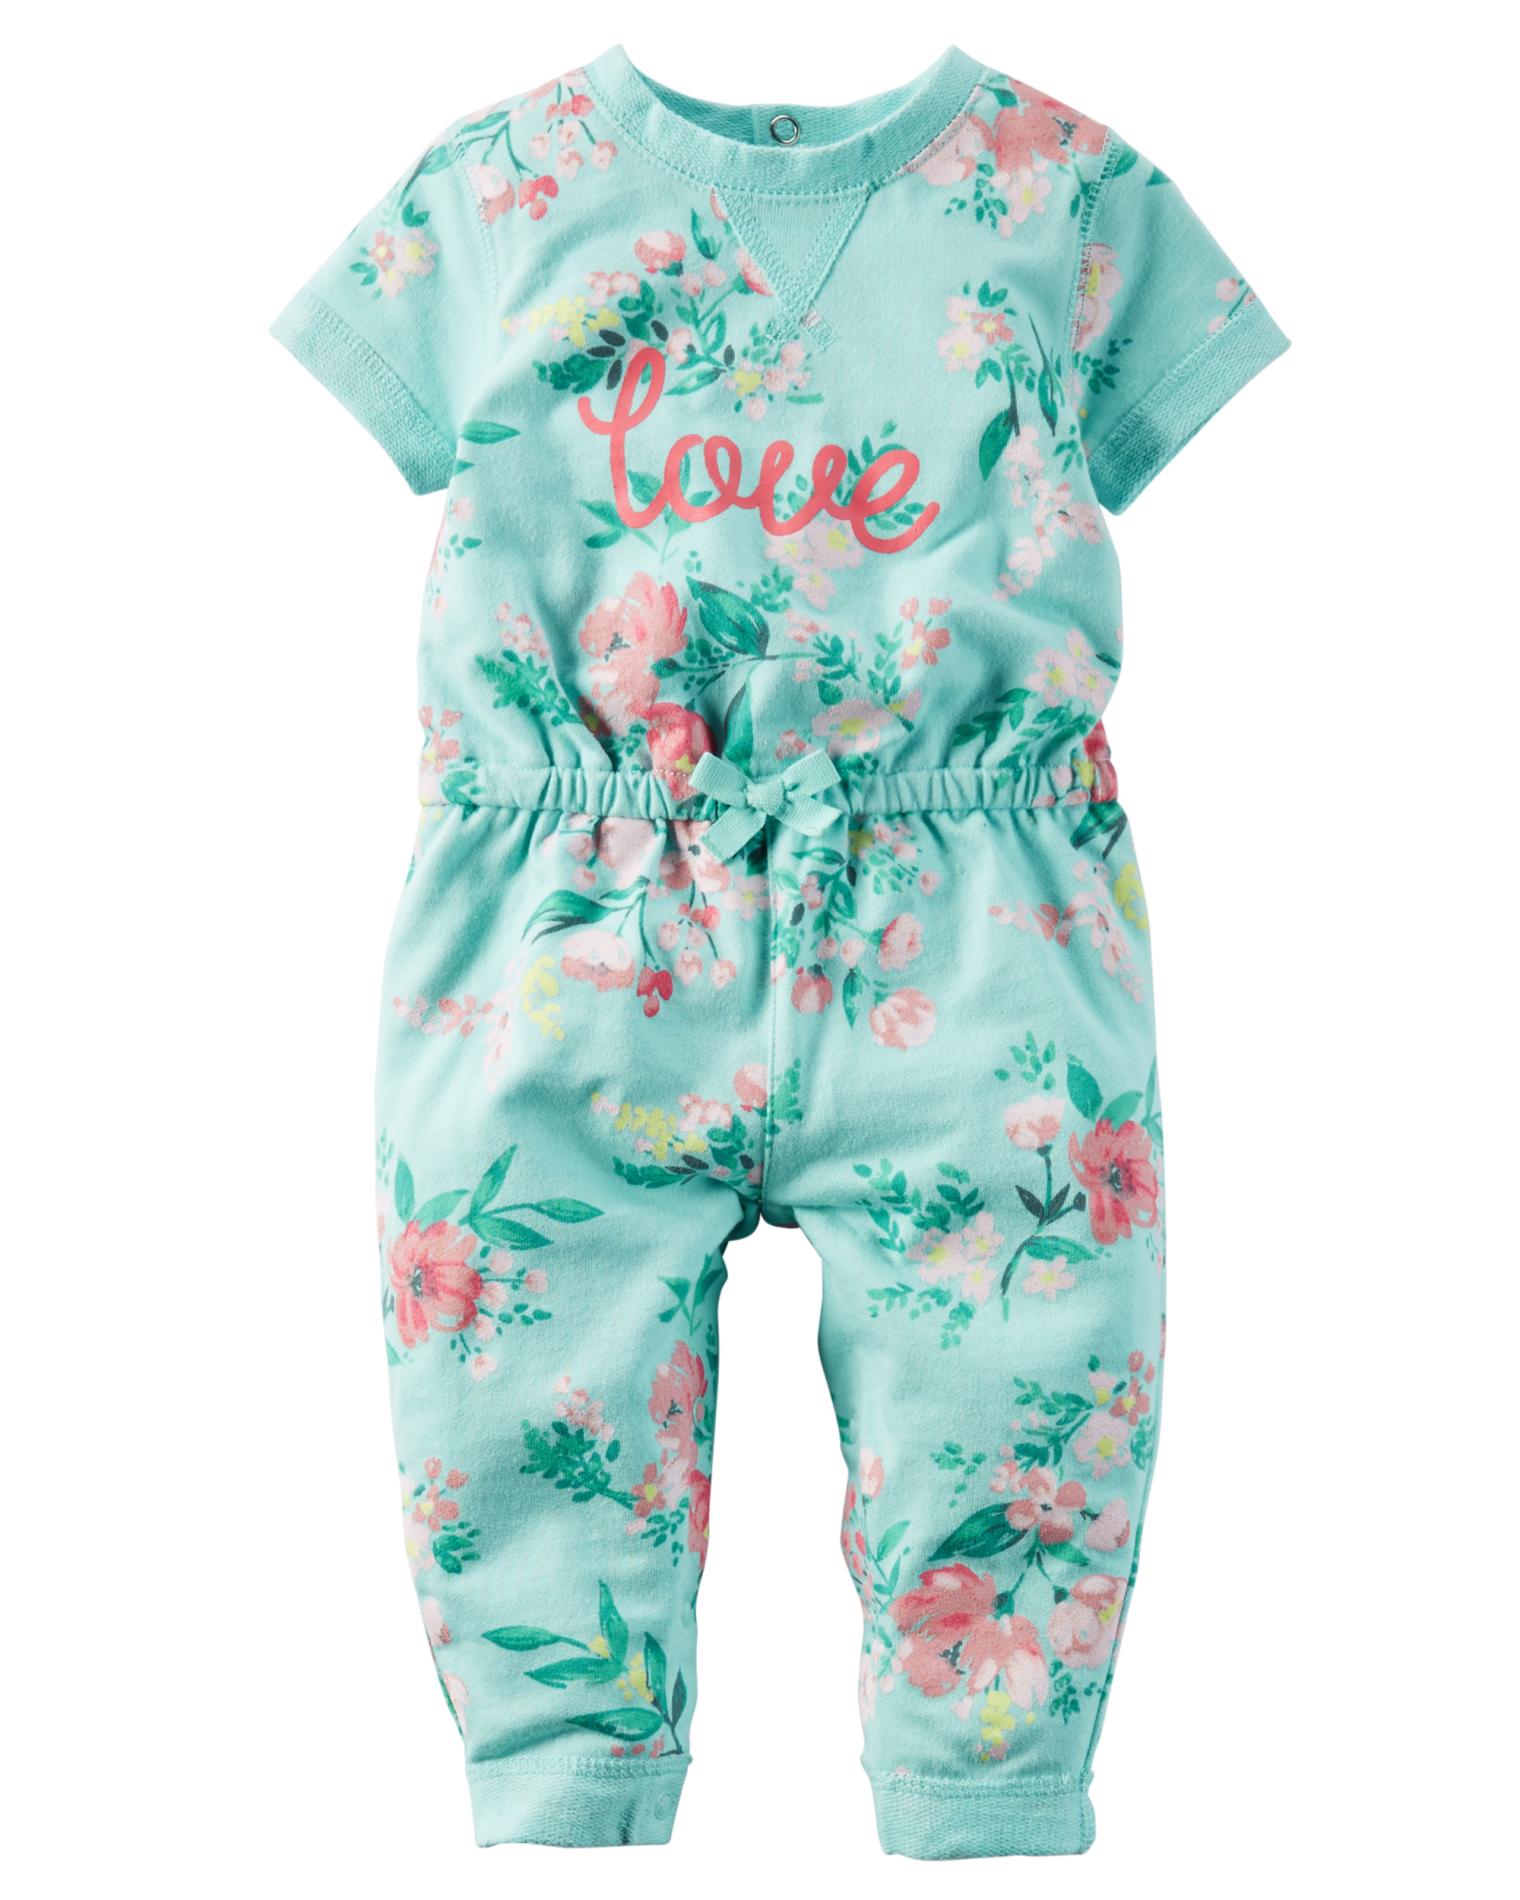 Carter's Newborn & Infant Girls' Jumpsuit - Floral Love